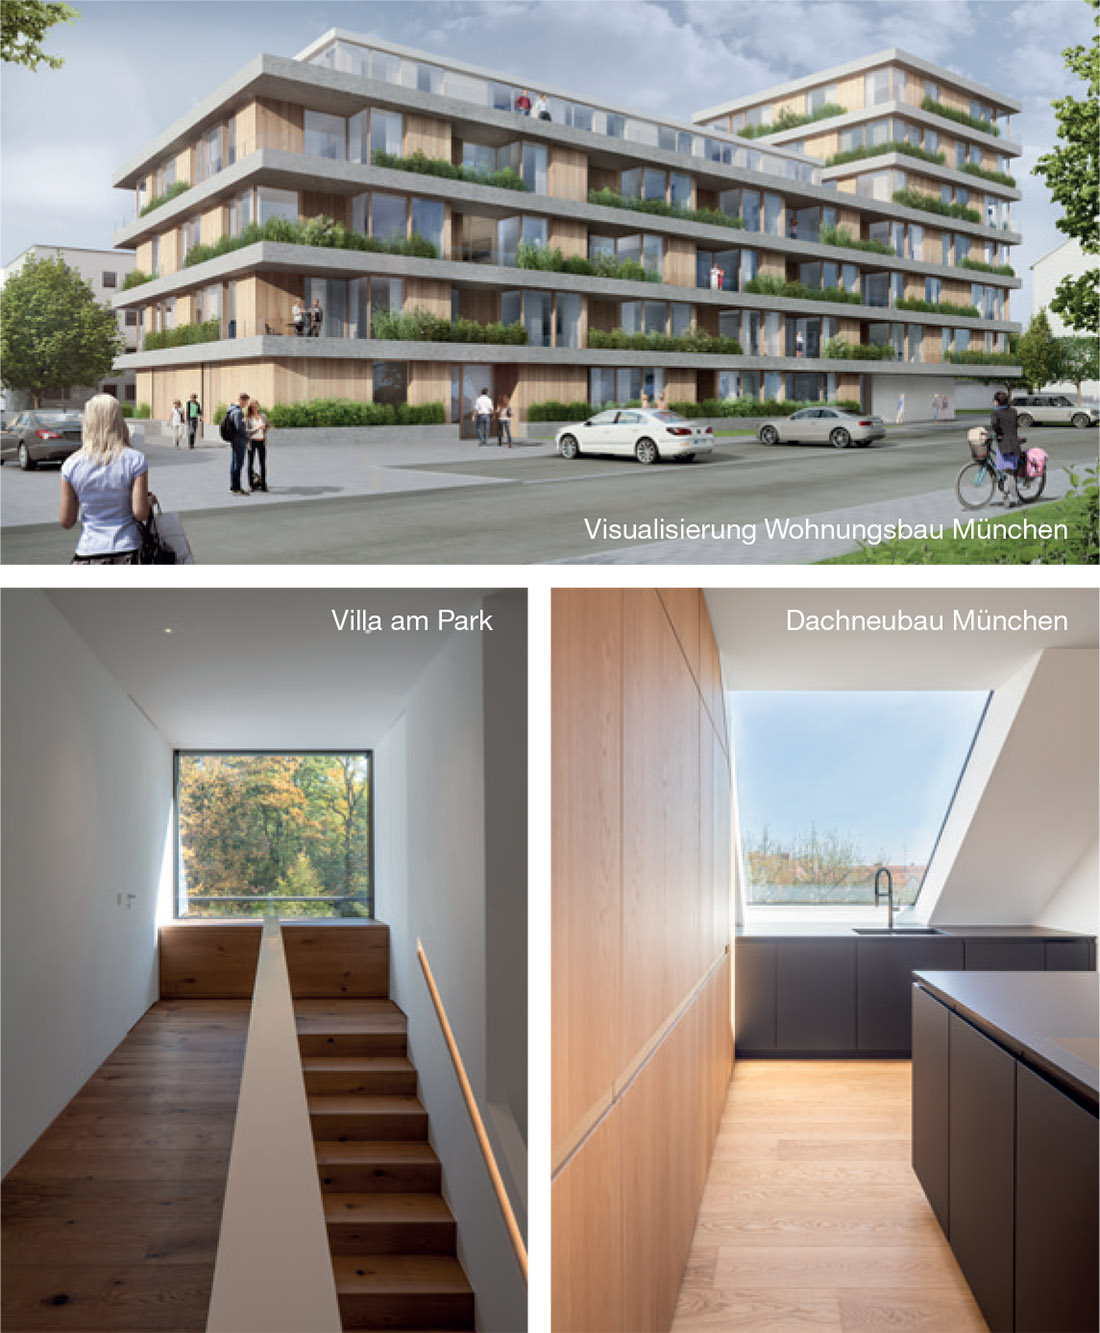 Unterlandstättner Architekten: PEOPLE ARE THE MEASUREMENT FOR SUSTAINABLE ARCHITECTURE